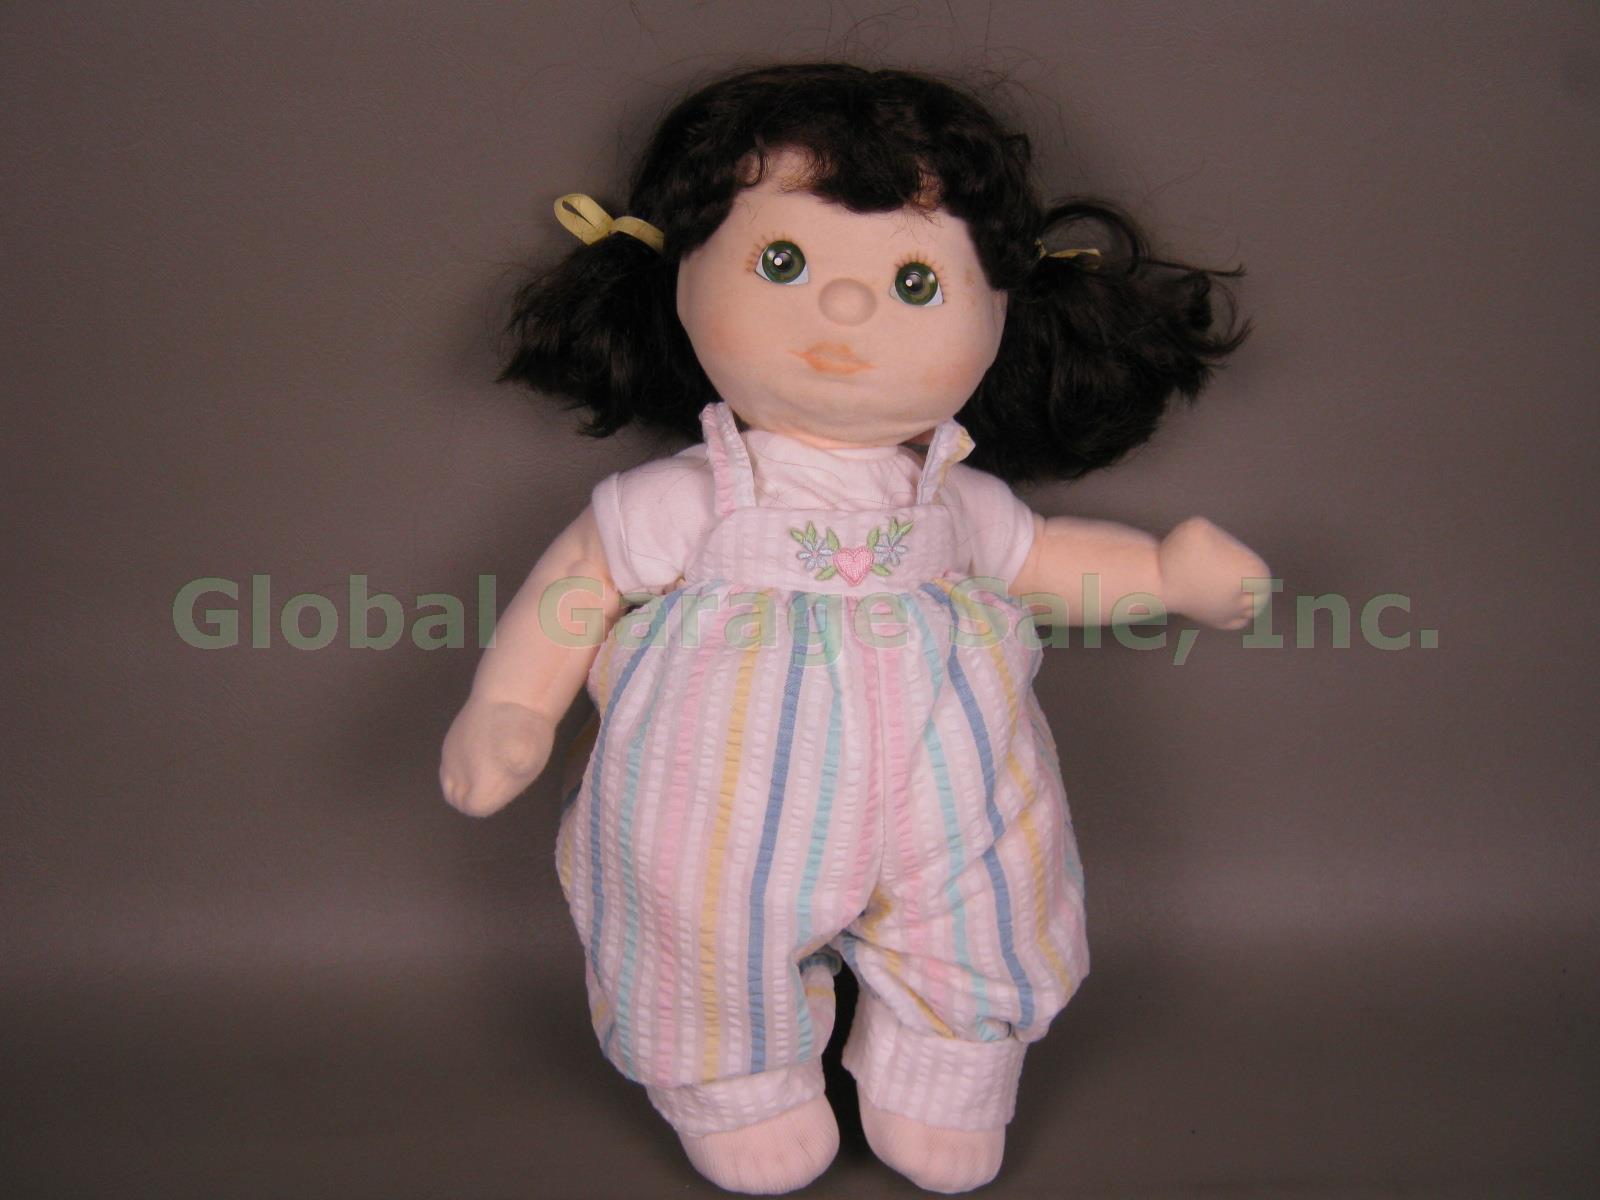 Vtg 1985 Mattel Brunette My Child Doll W/ Green Eyes Brown Hair Outfit + Book NR 3